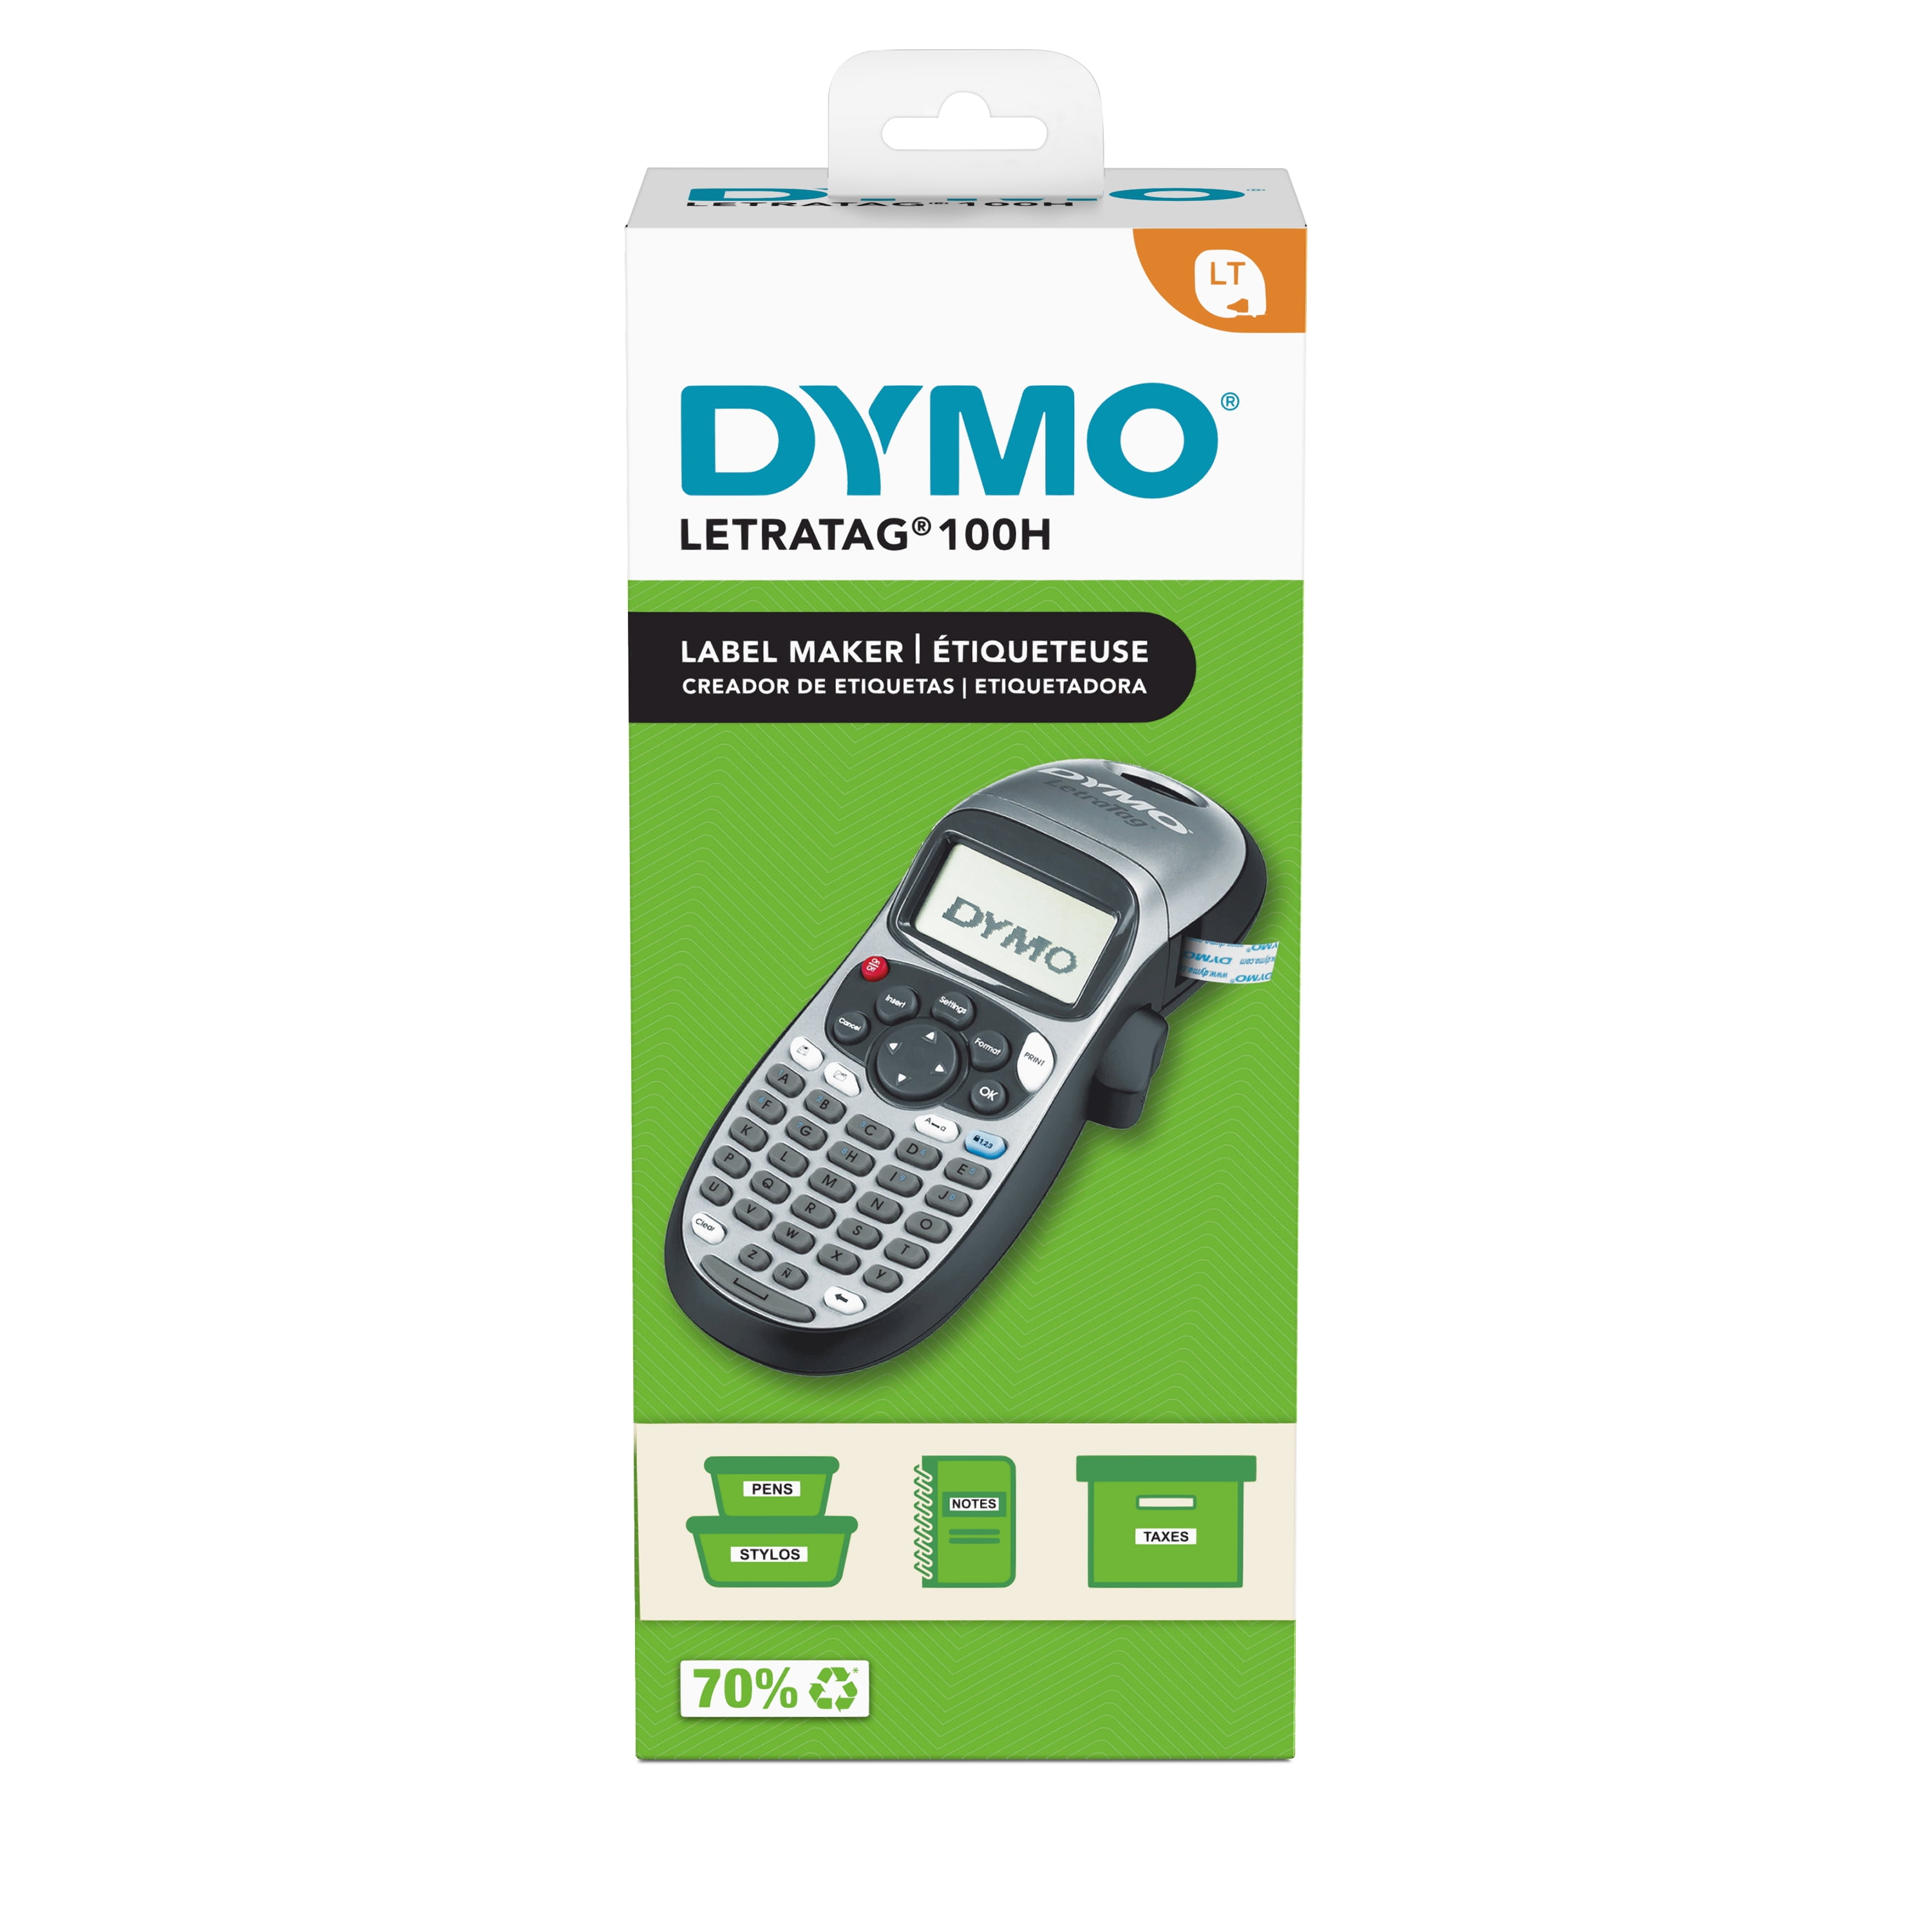 DYMO Letratag 100H Printer, Portable and Handheld Label Maker